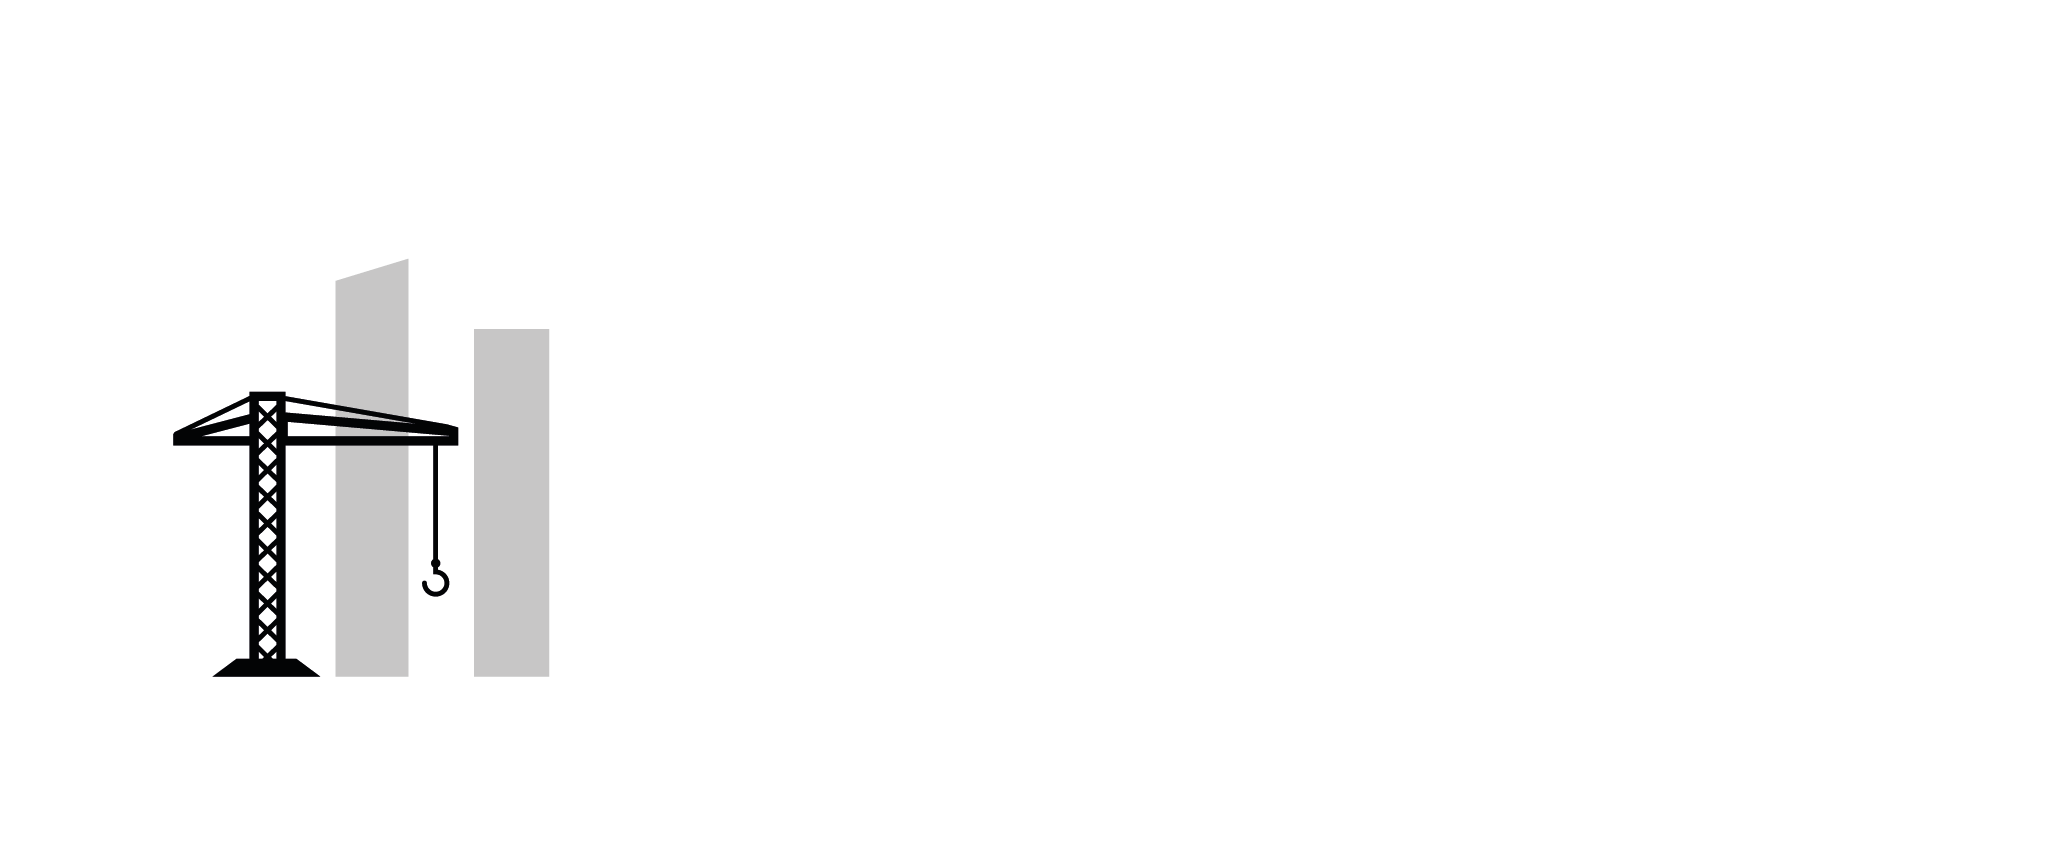 The Formwork Factory Logo White